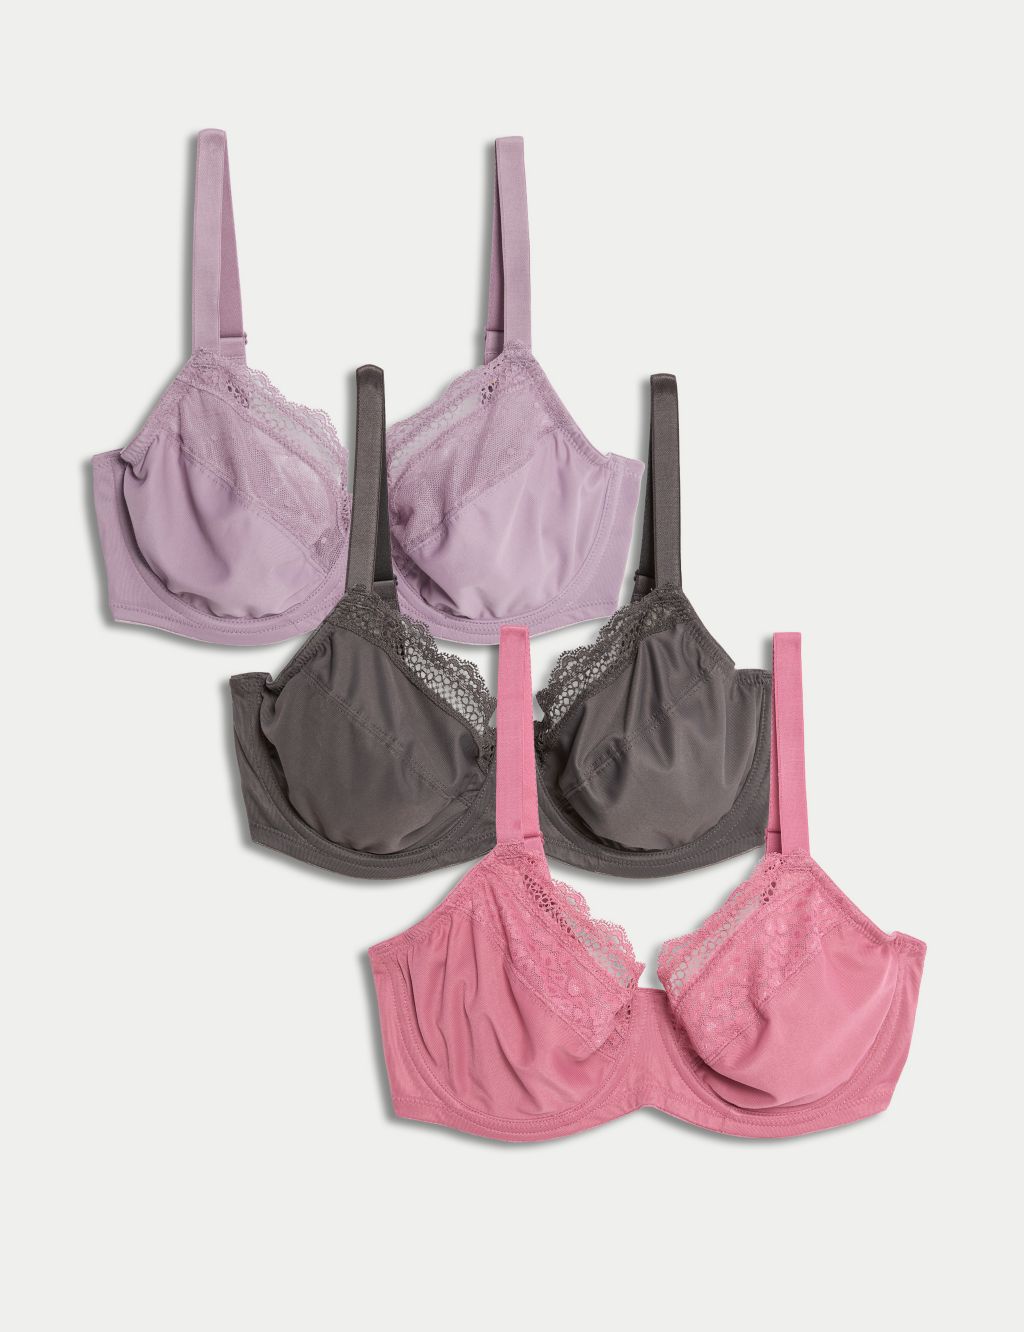 32D Bra Bundle x3 bras by MARKS&SPENCER ladies lingerie (736)